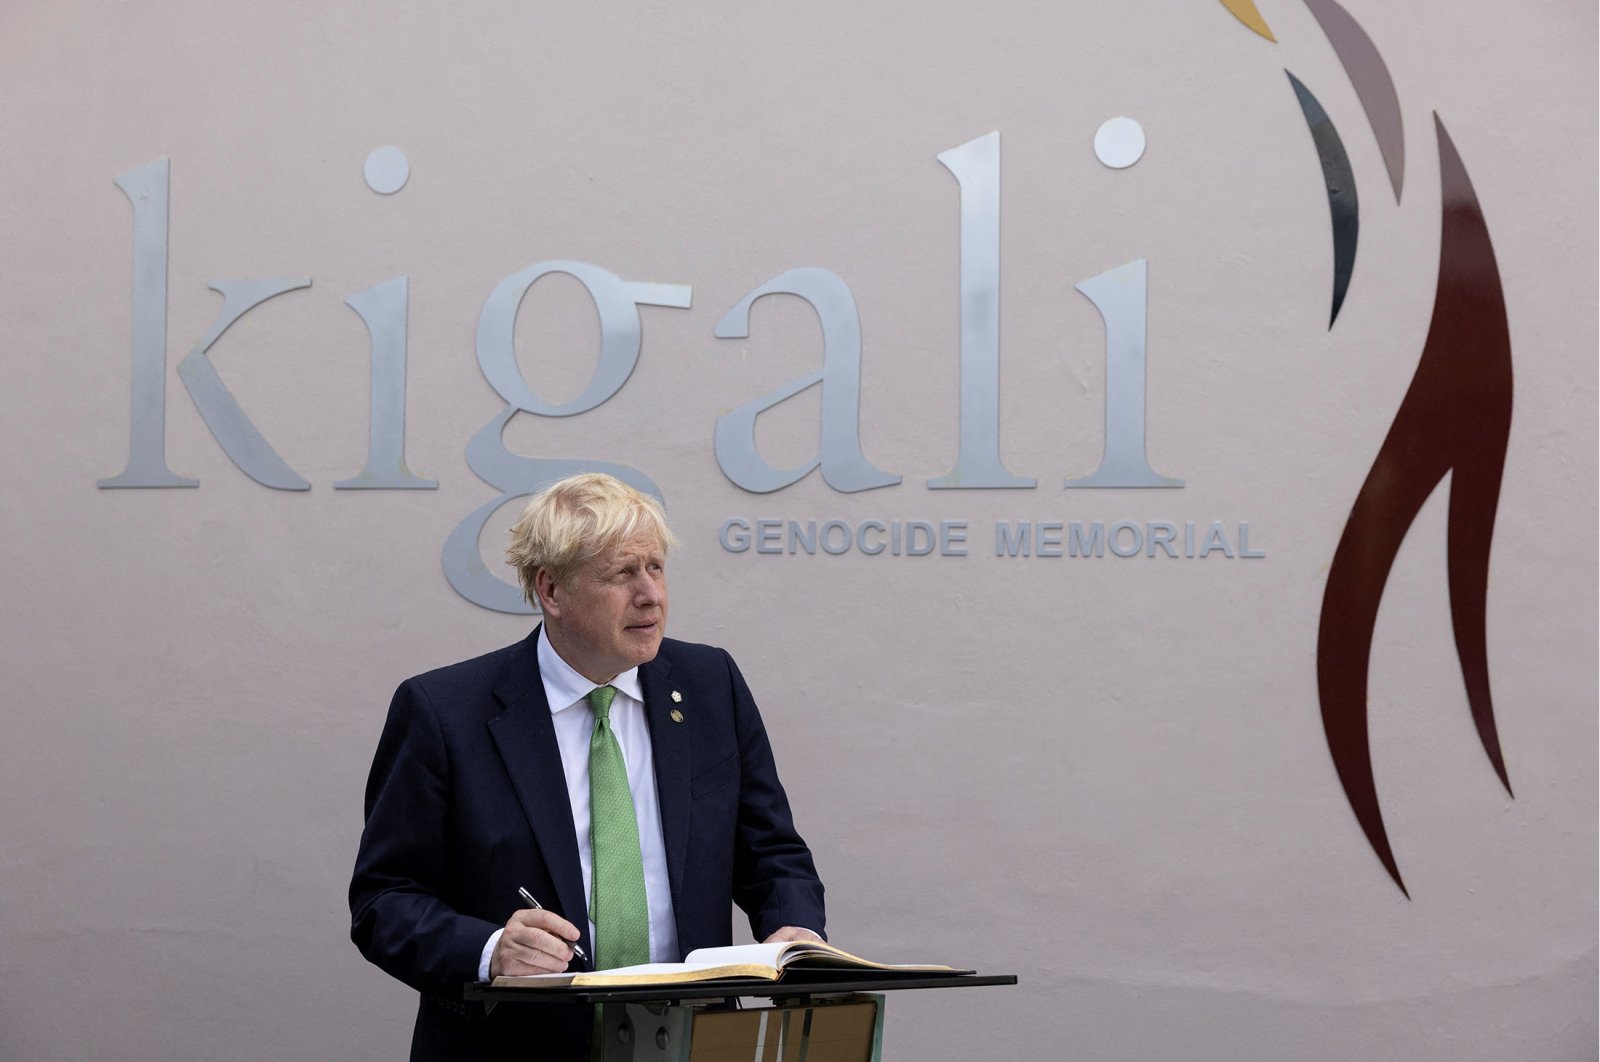 British Prime Minister Boris Johnson signs the visitors book while visiting the Kigali Genocide Memorial in Kigali, Rwanda, June 23, 2022. (Reuters Photo)